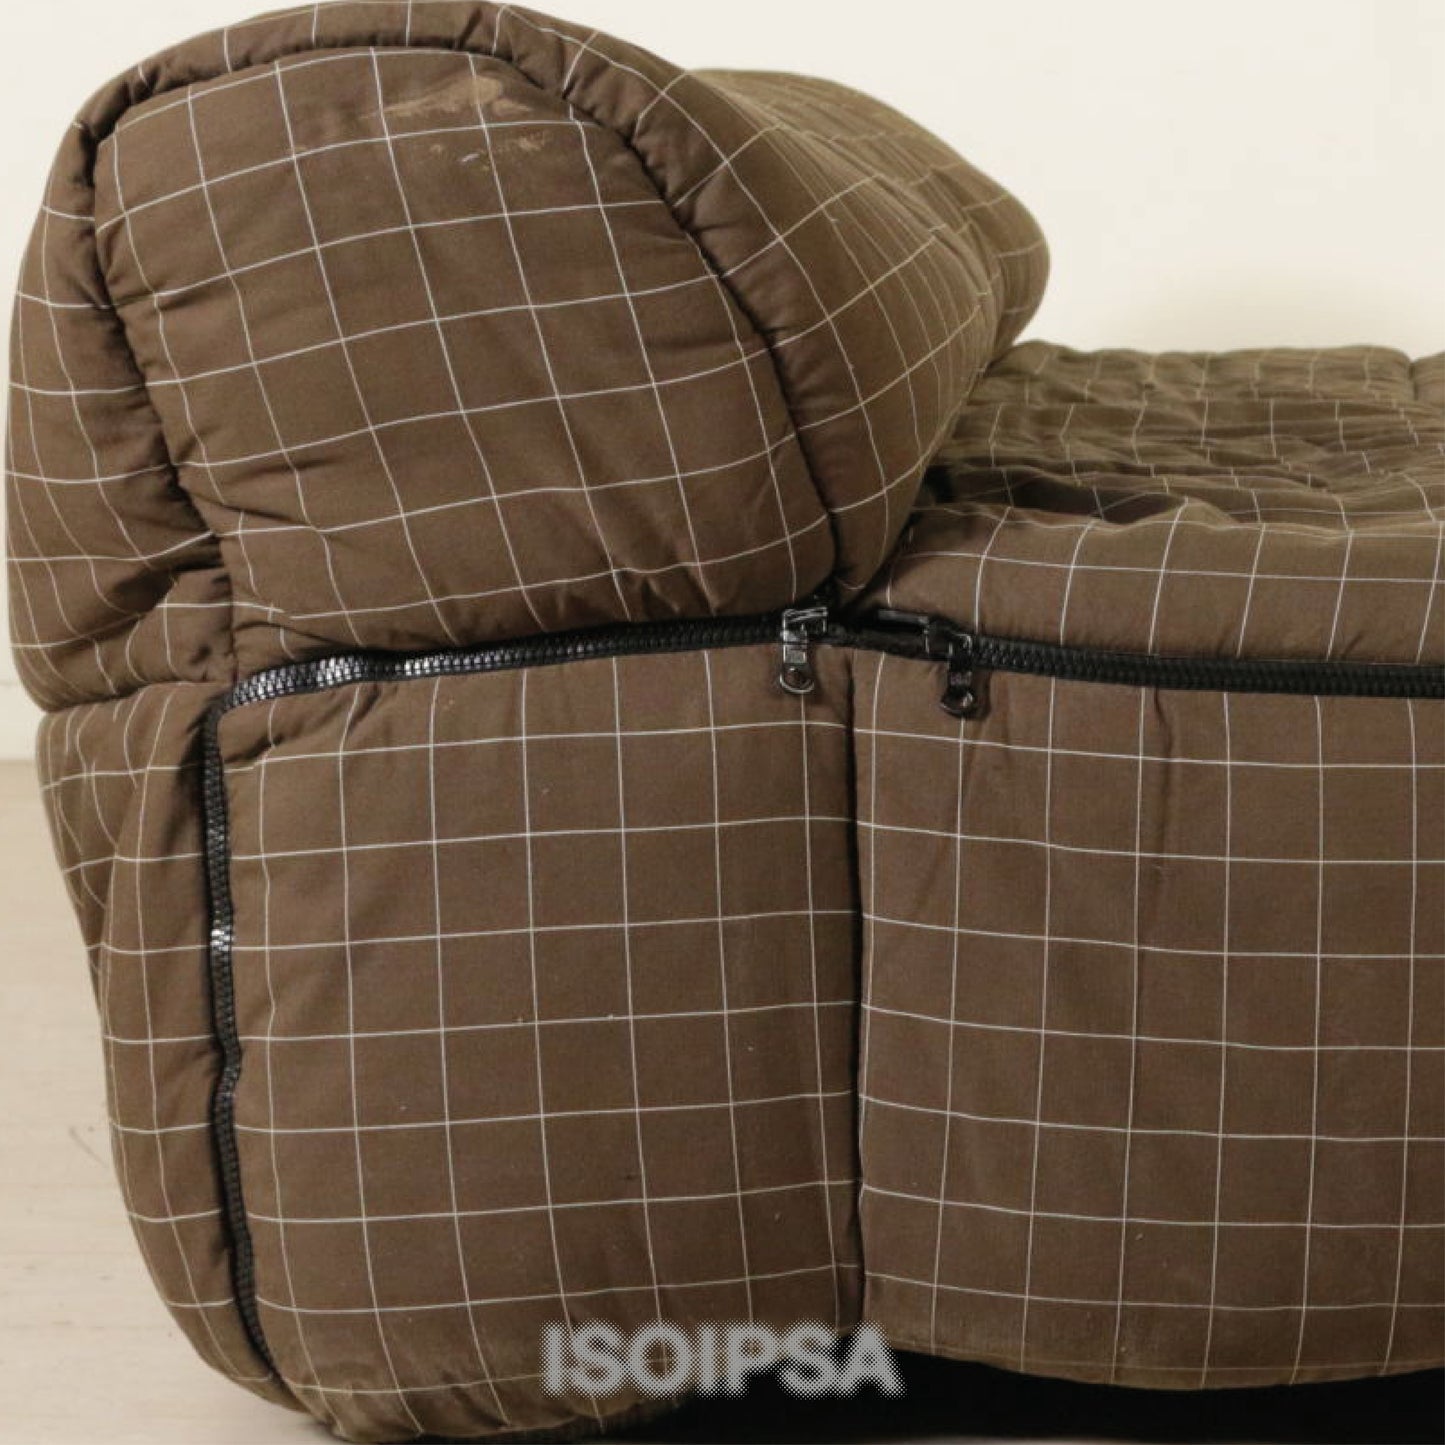 Strip sofa